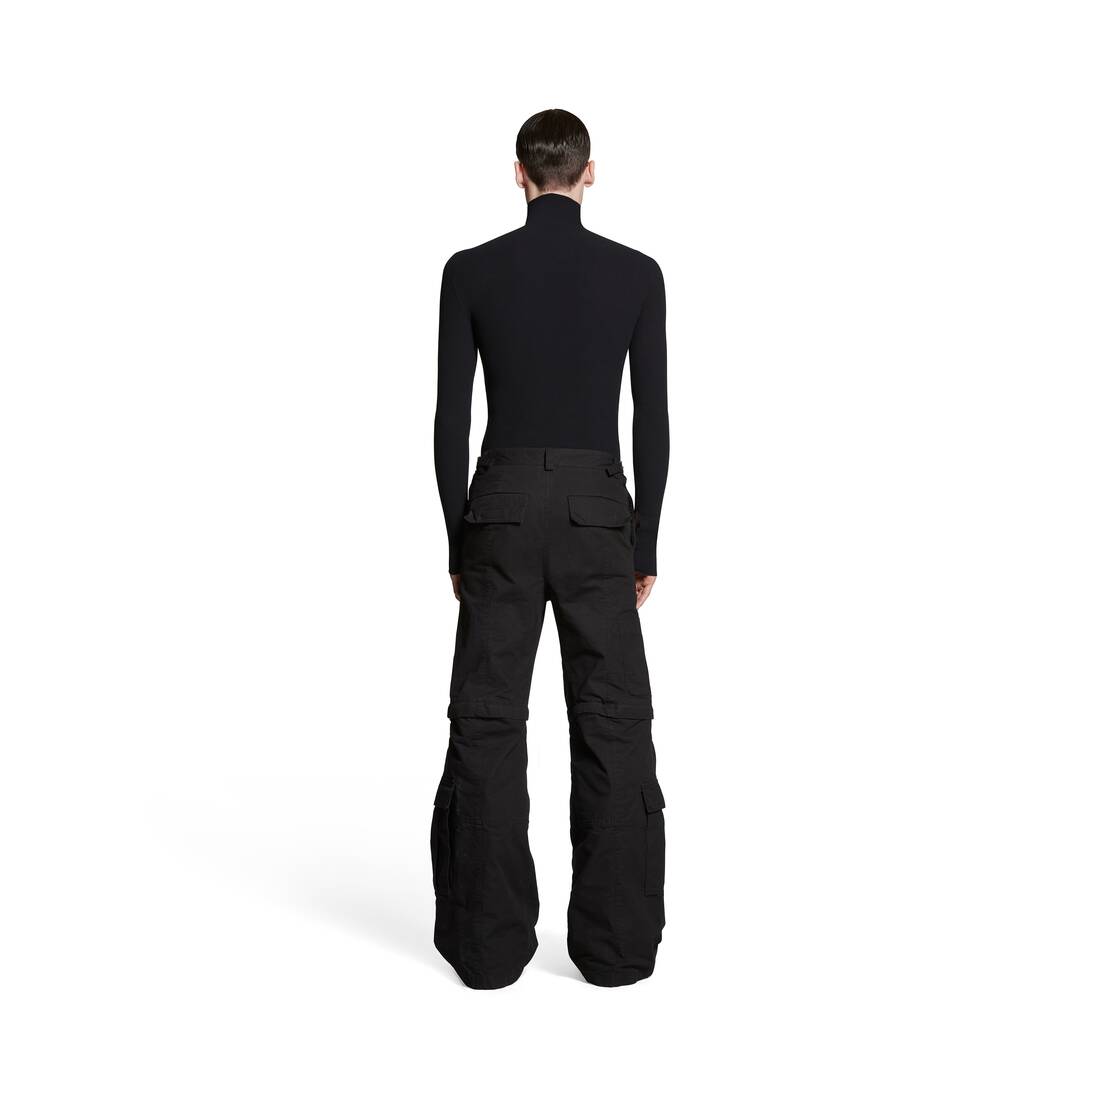 GAIAM Black Cargo Pants Size XL - 52% off